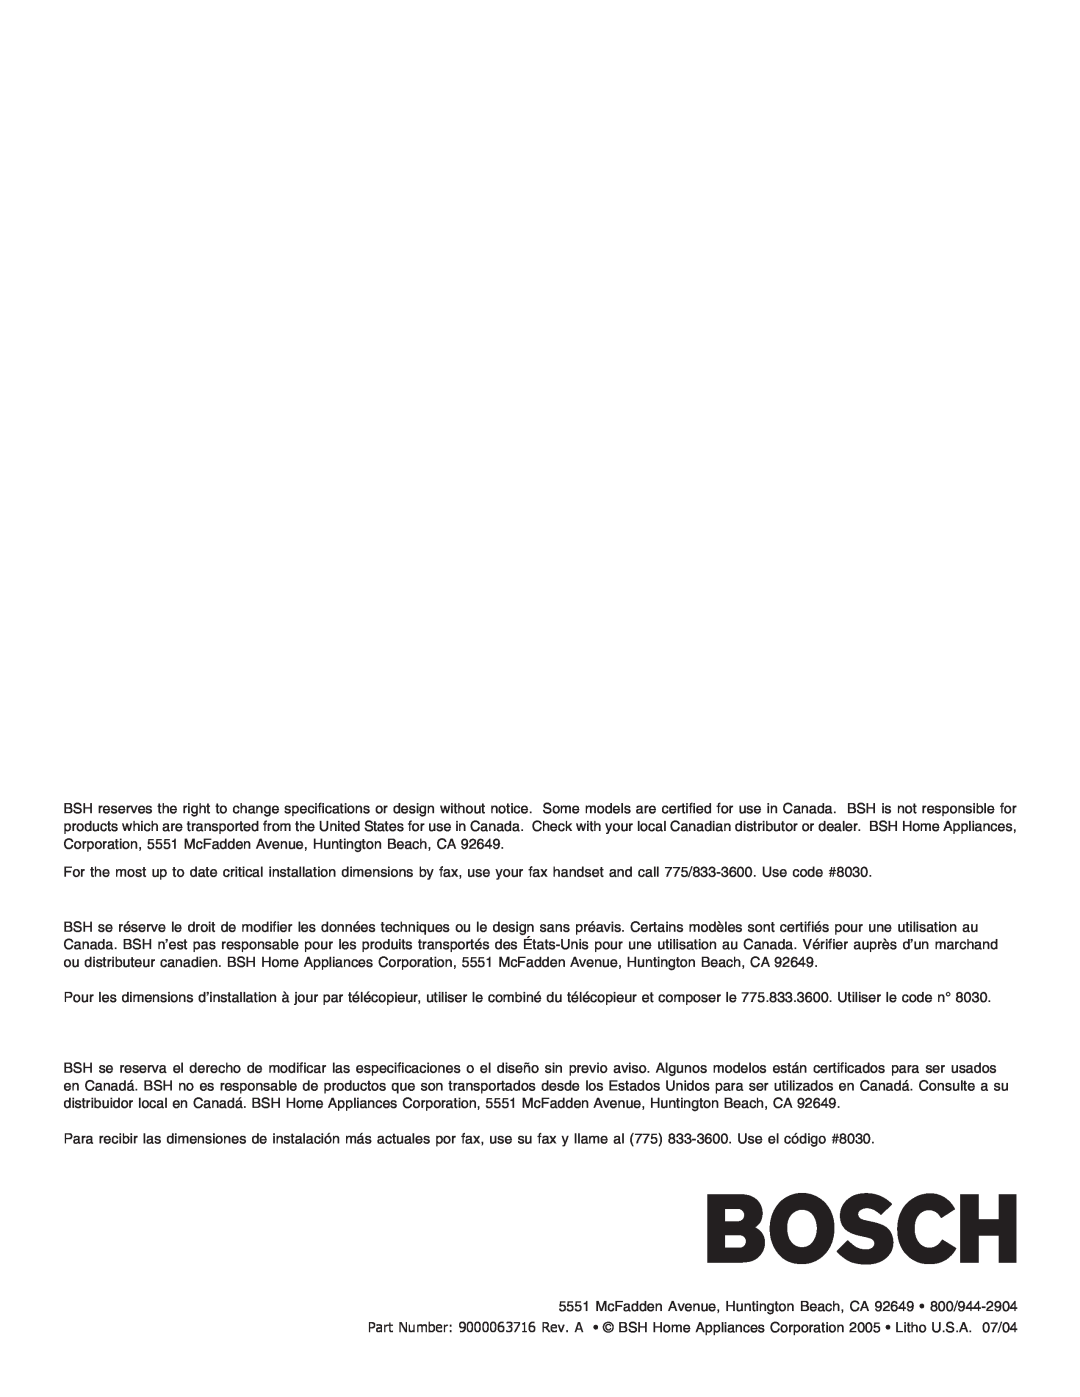 Bosch Appliances SHE66C installation instructions 